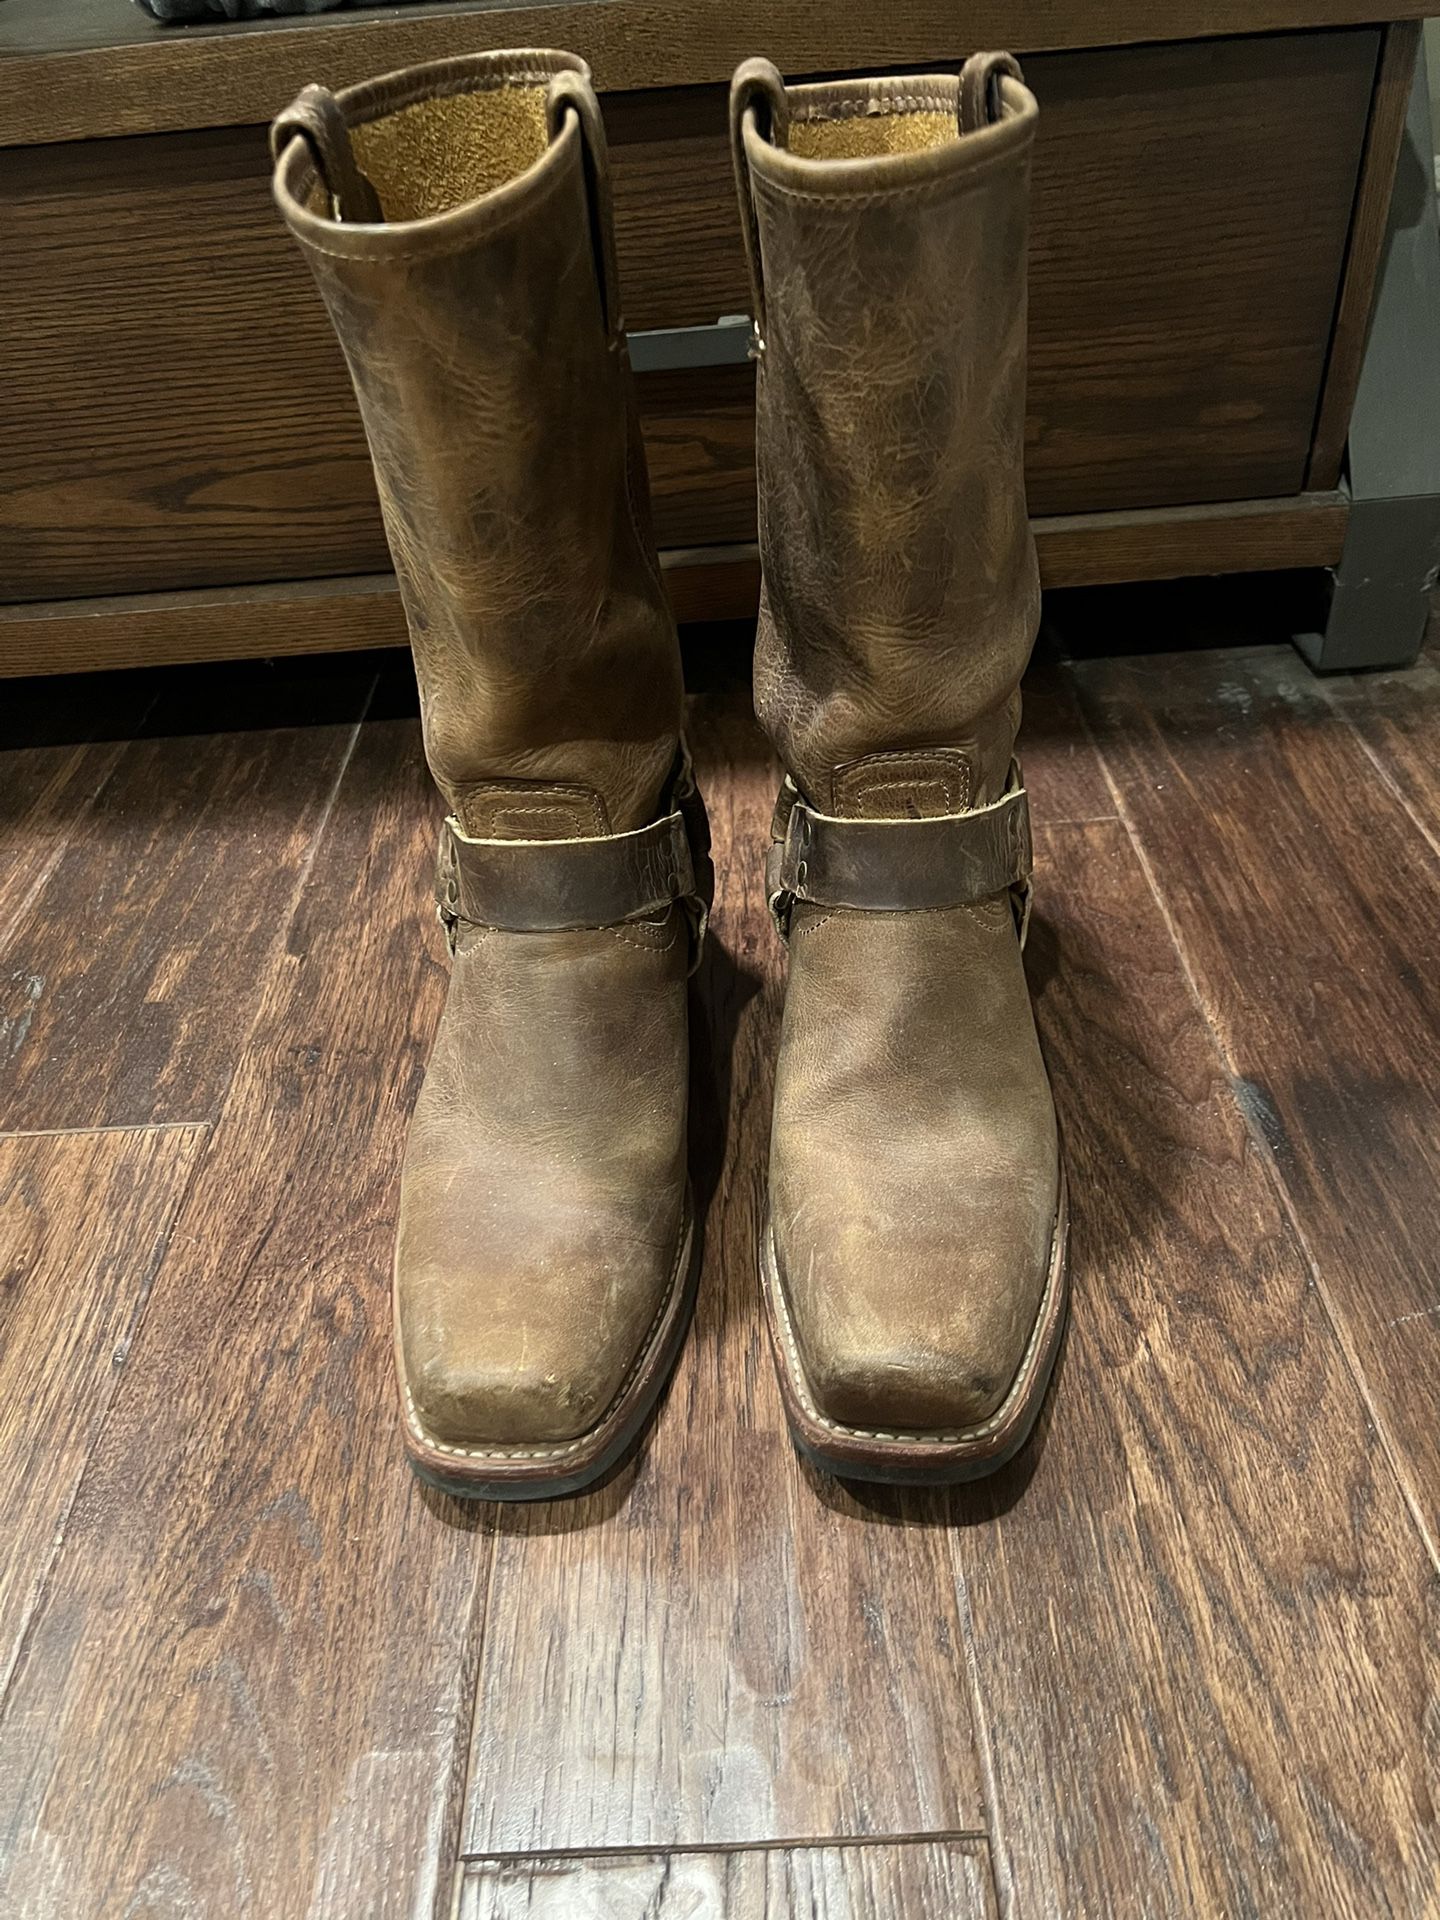 Frye boots Style 77300 Women’s Size 11 M